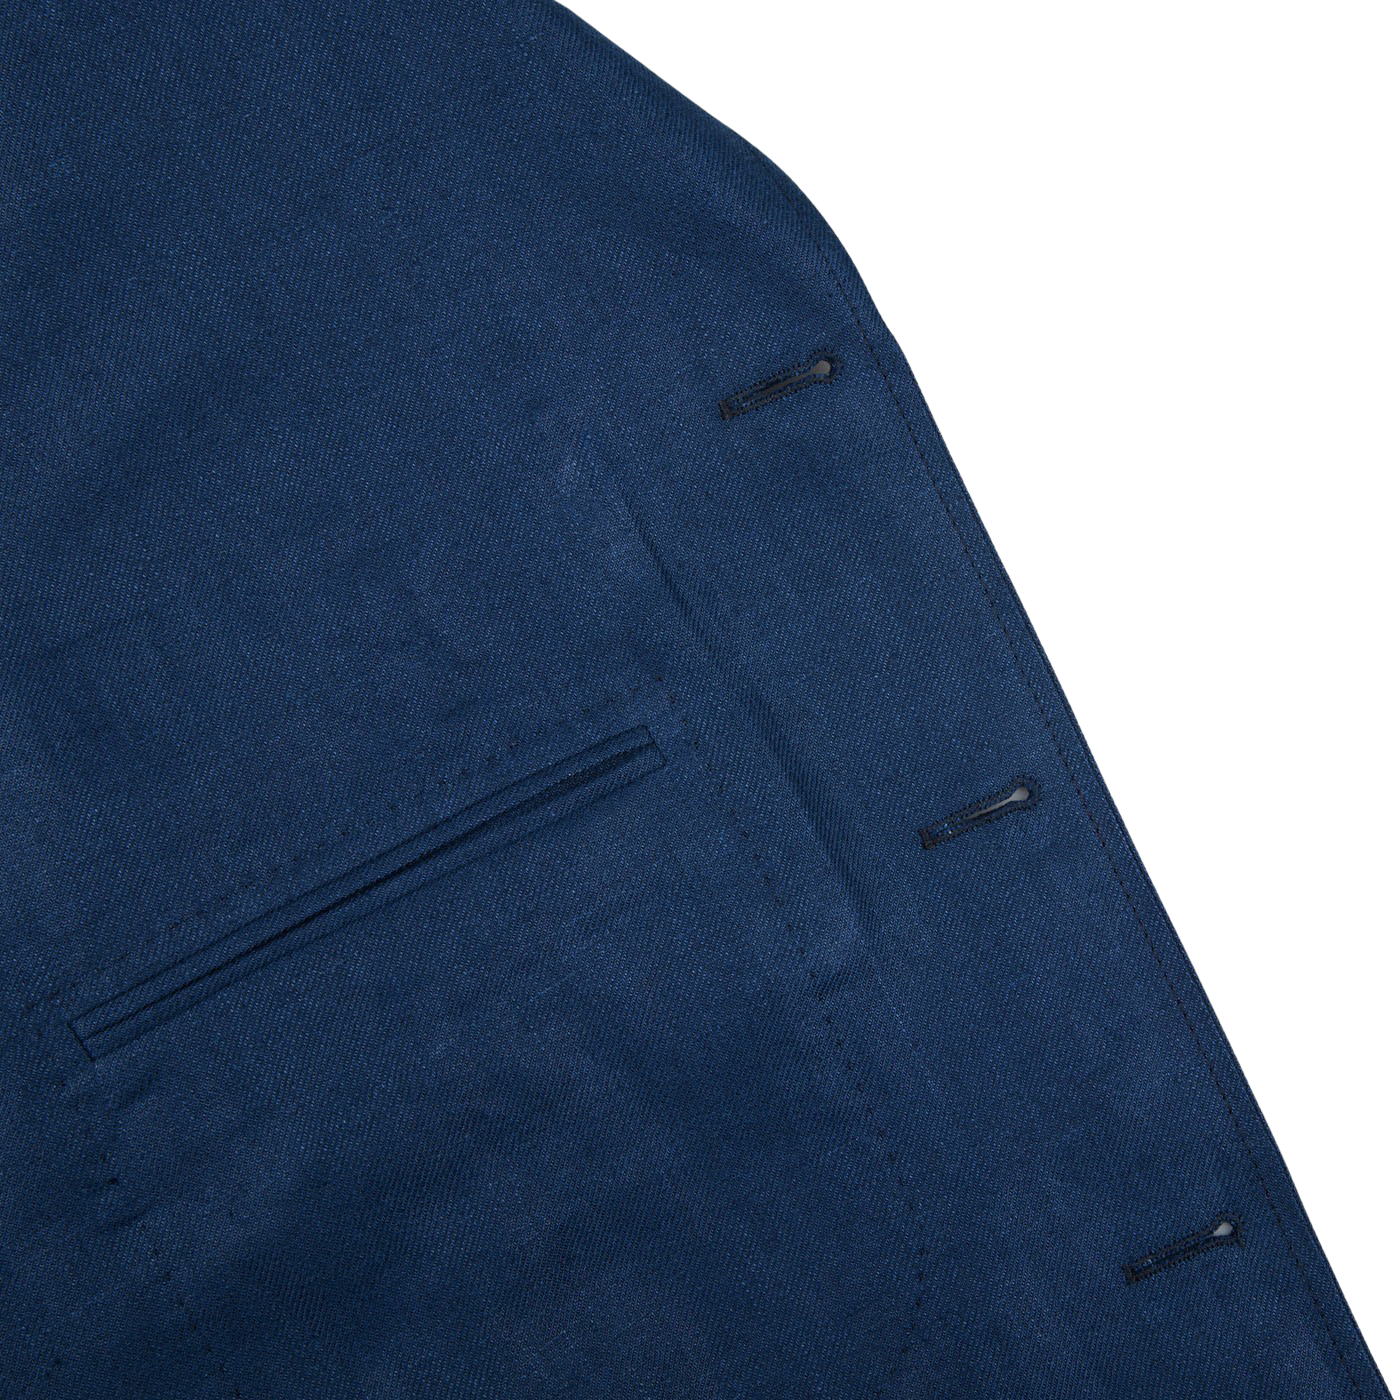 A close up of a Indigo Blue Linen Twill Field Jacket by Luigi Bianchi.